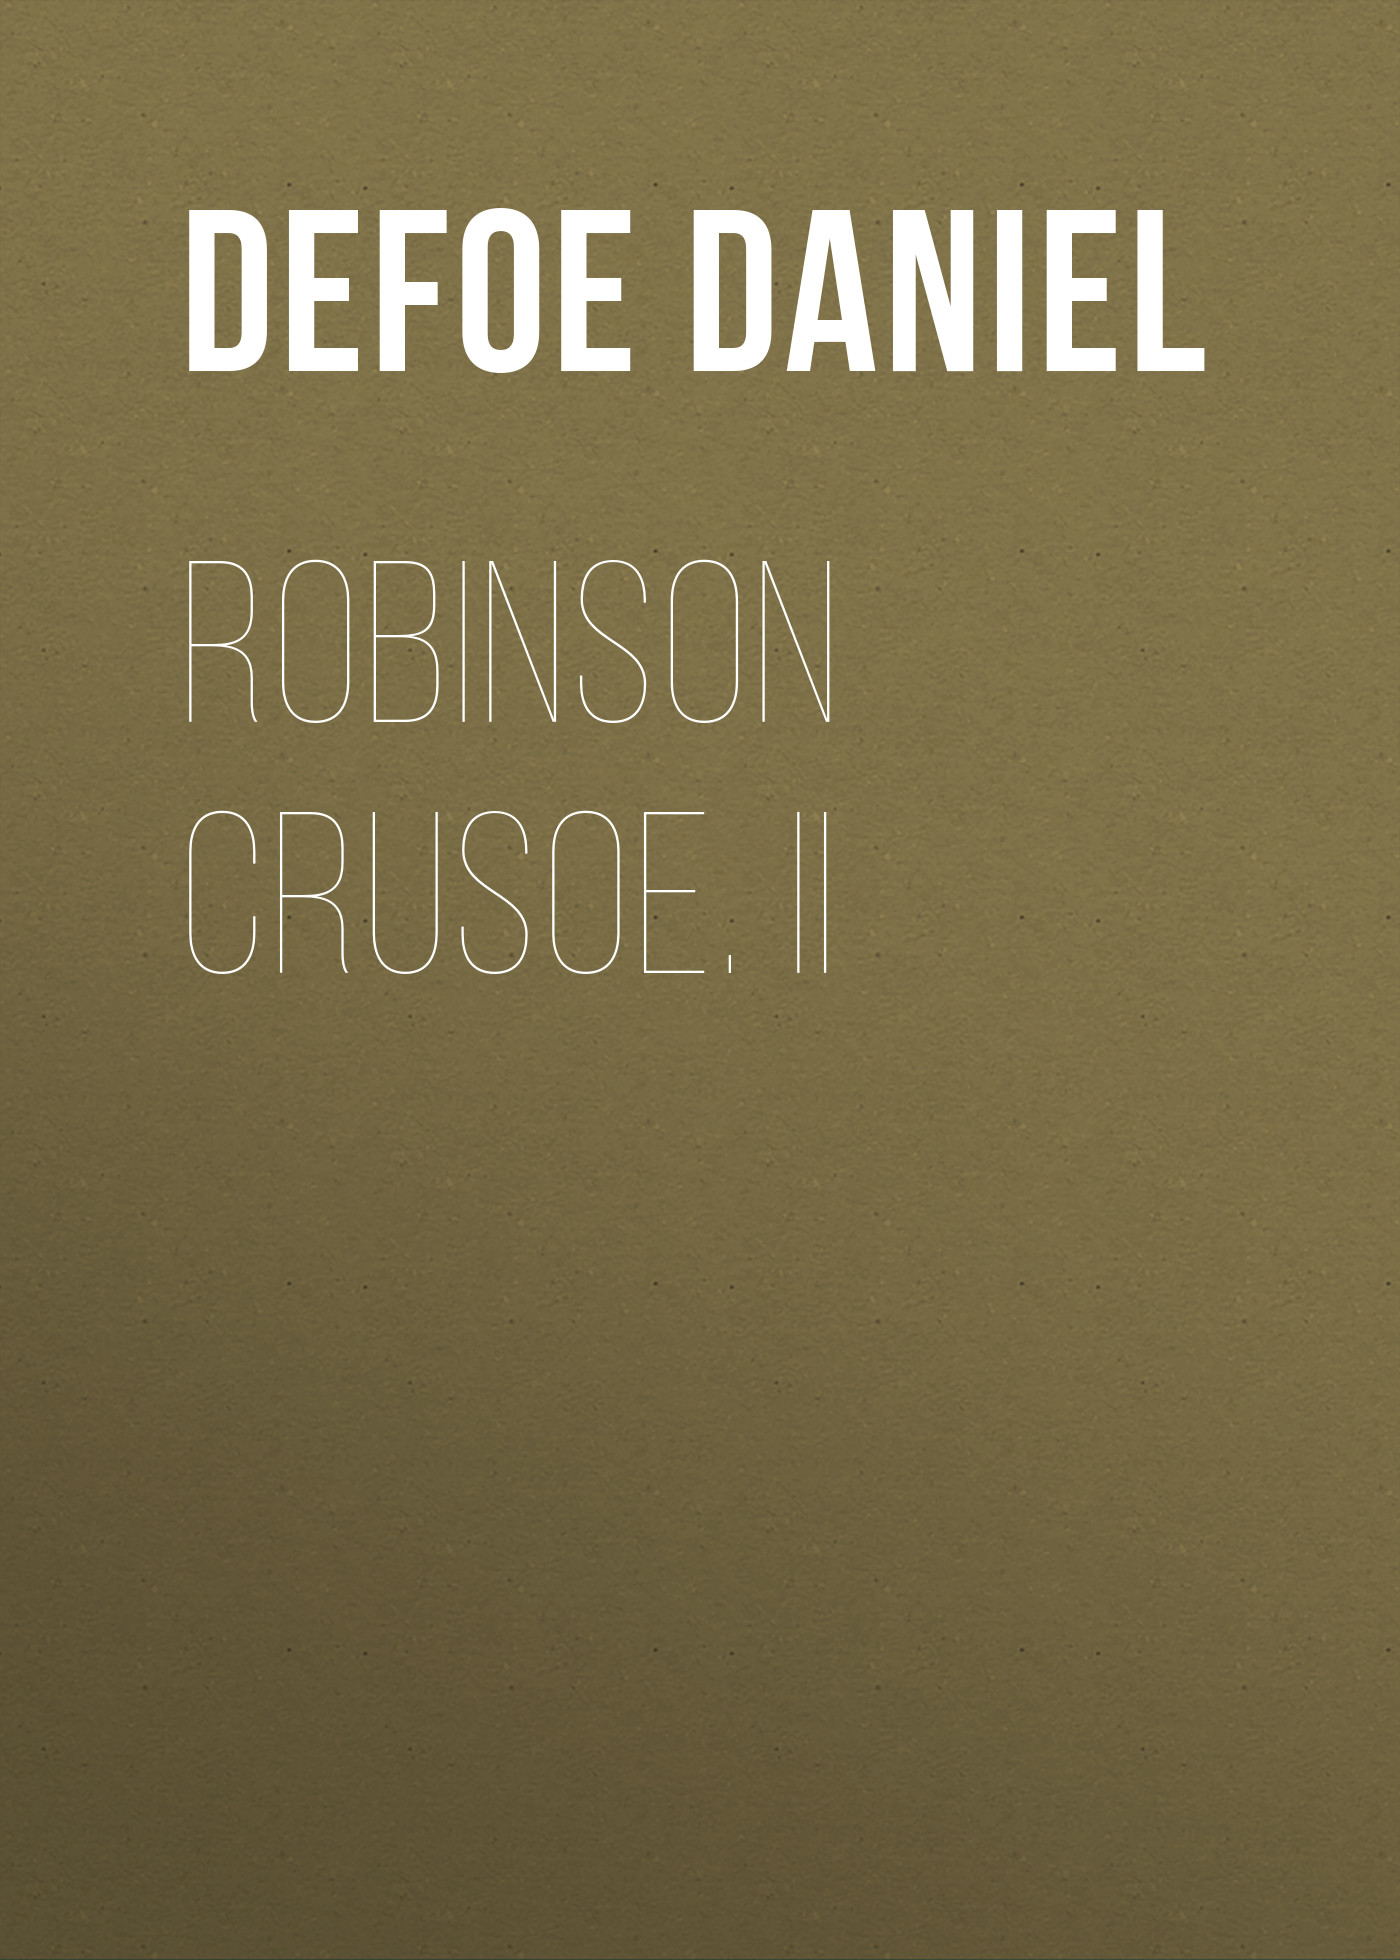 Robinson Crusoe. II